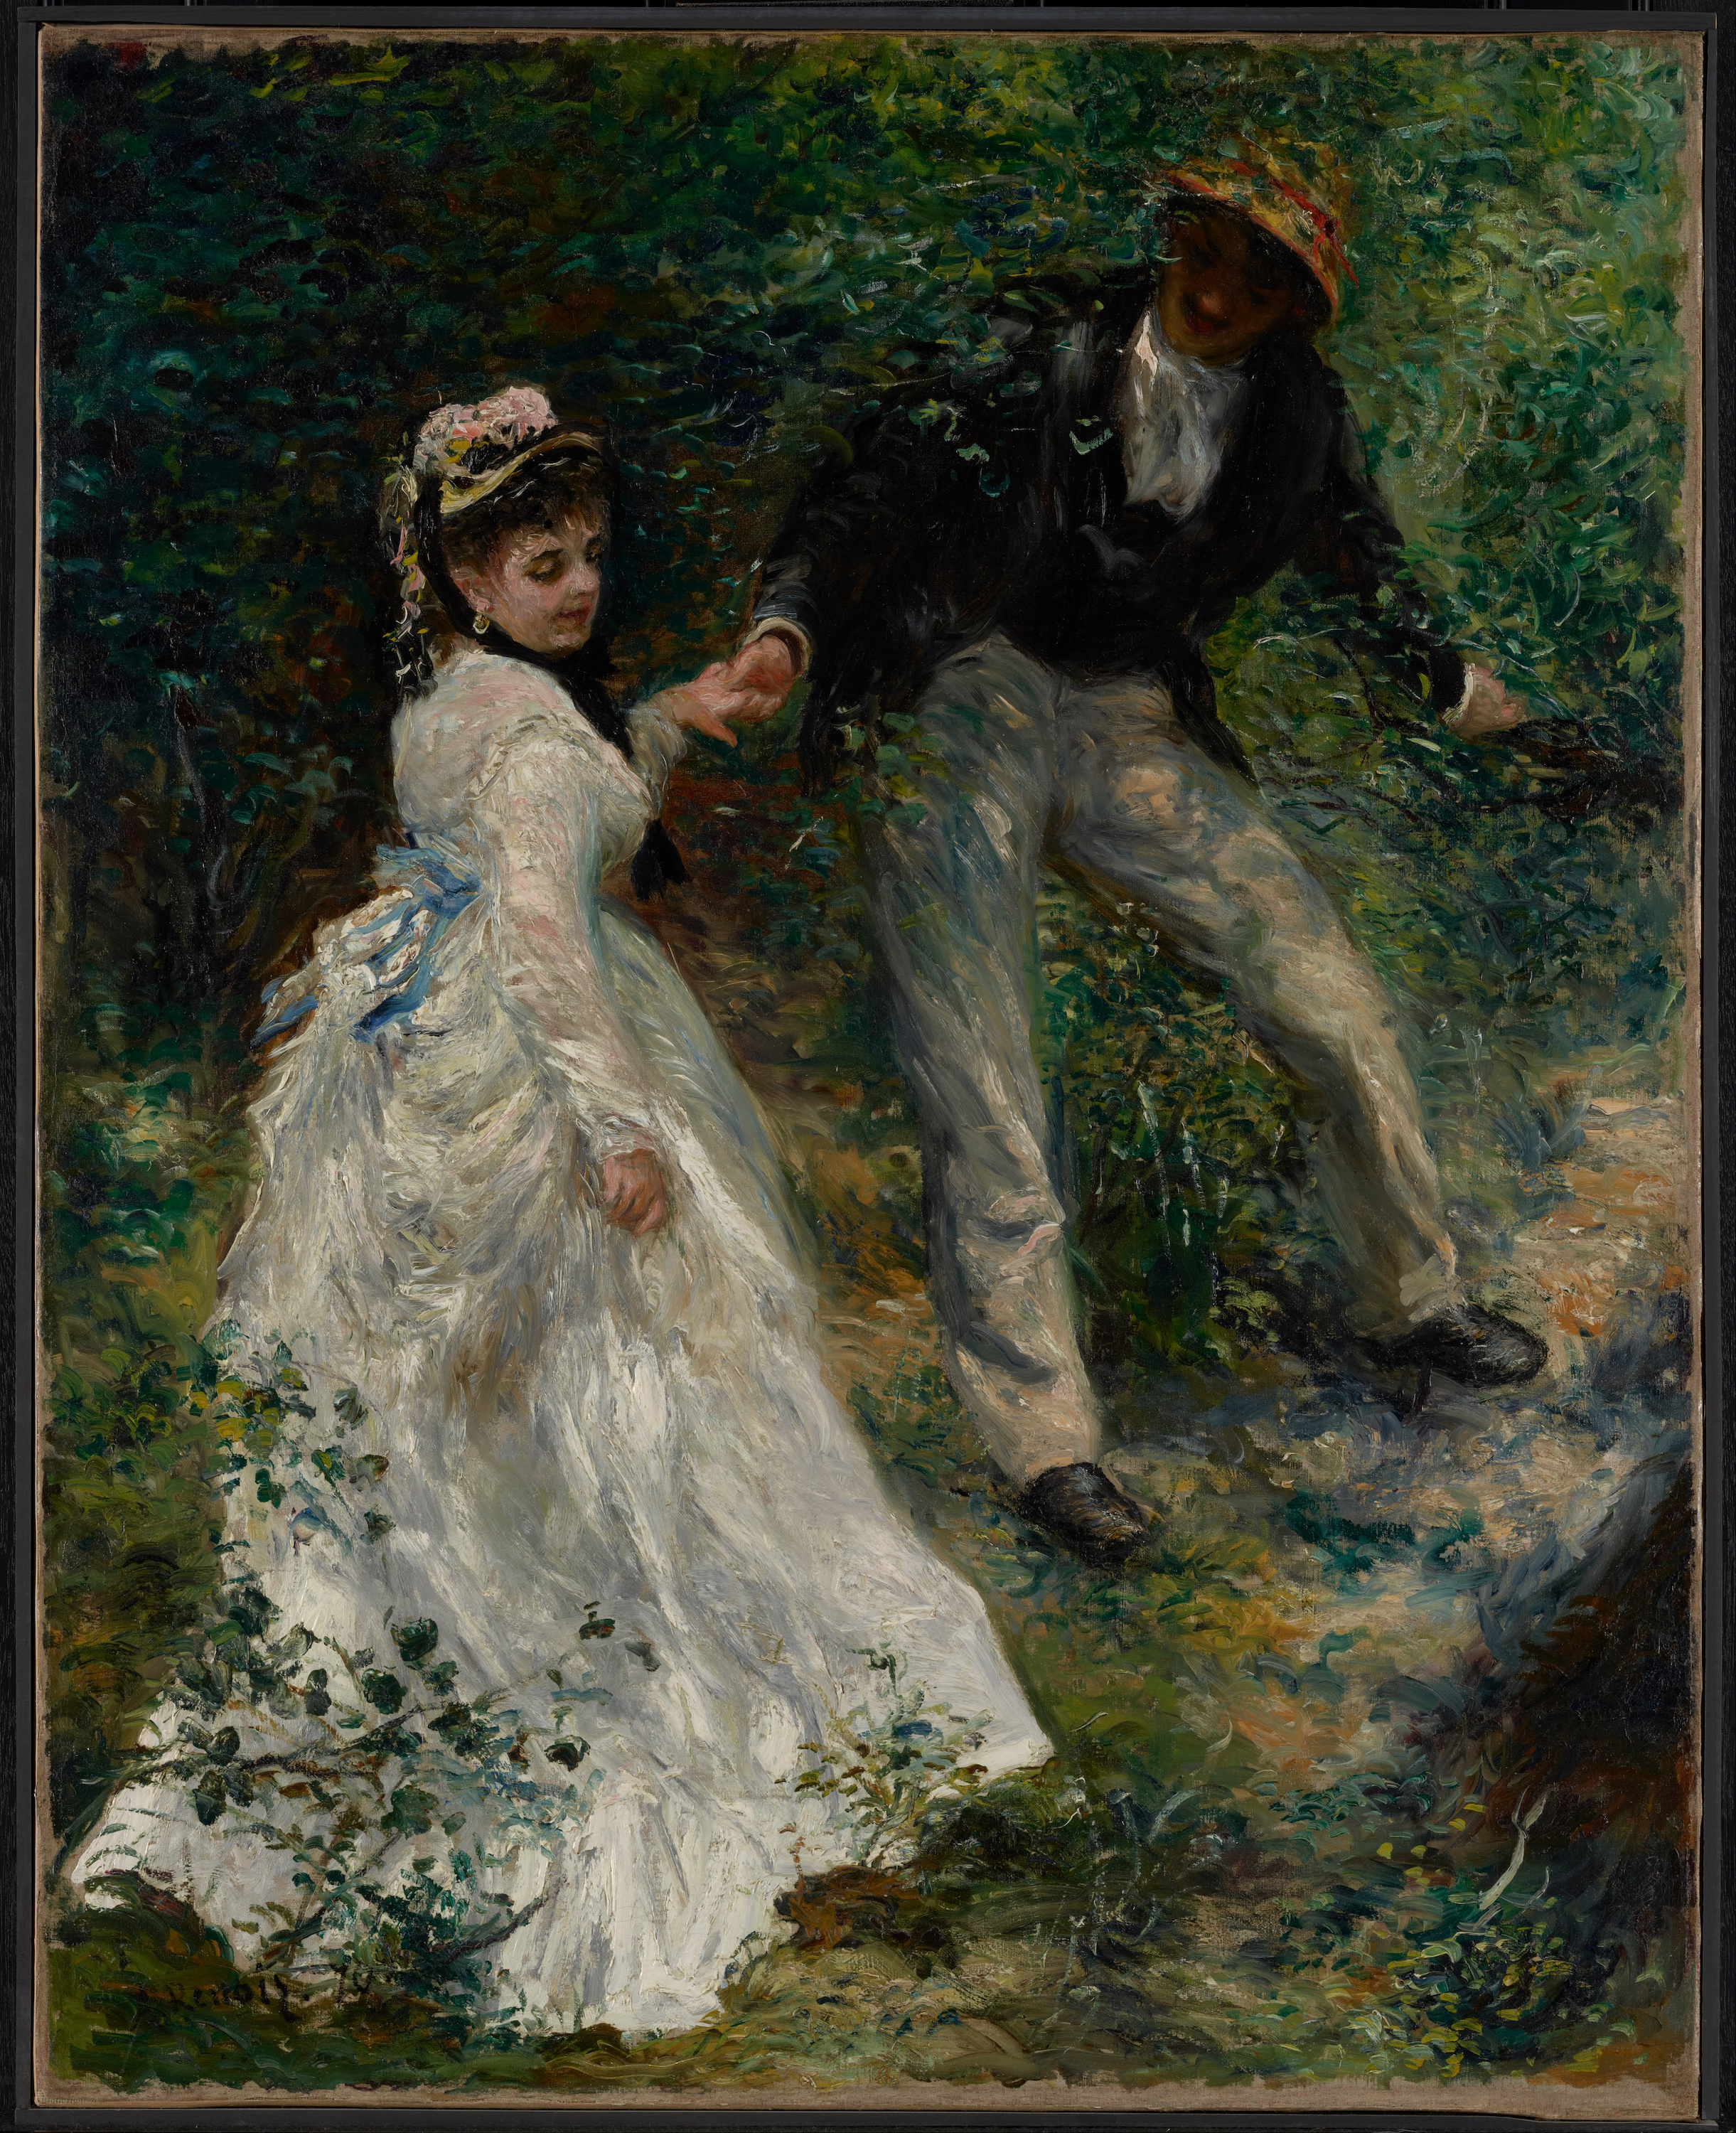 La Passeggiata by Pierre-Auguste Renoir - 1870 - 64.8 x 81.3 cm 